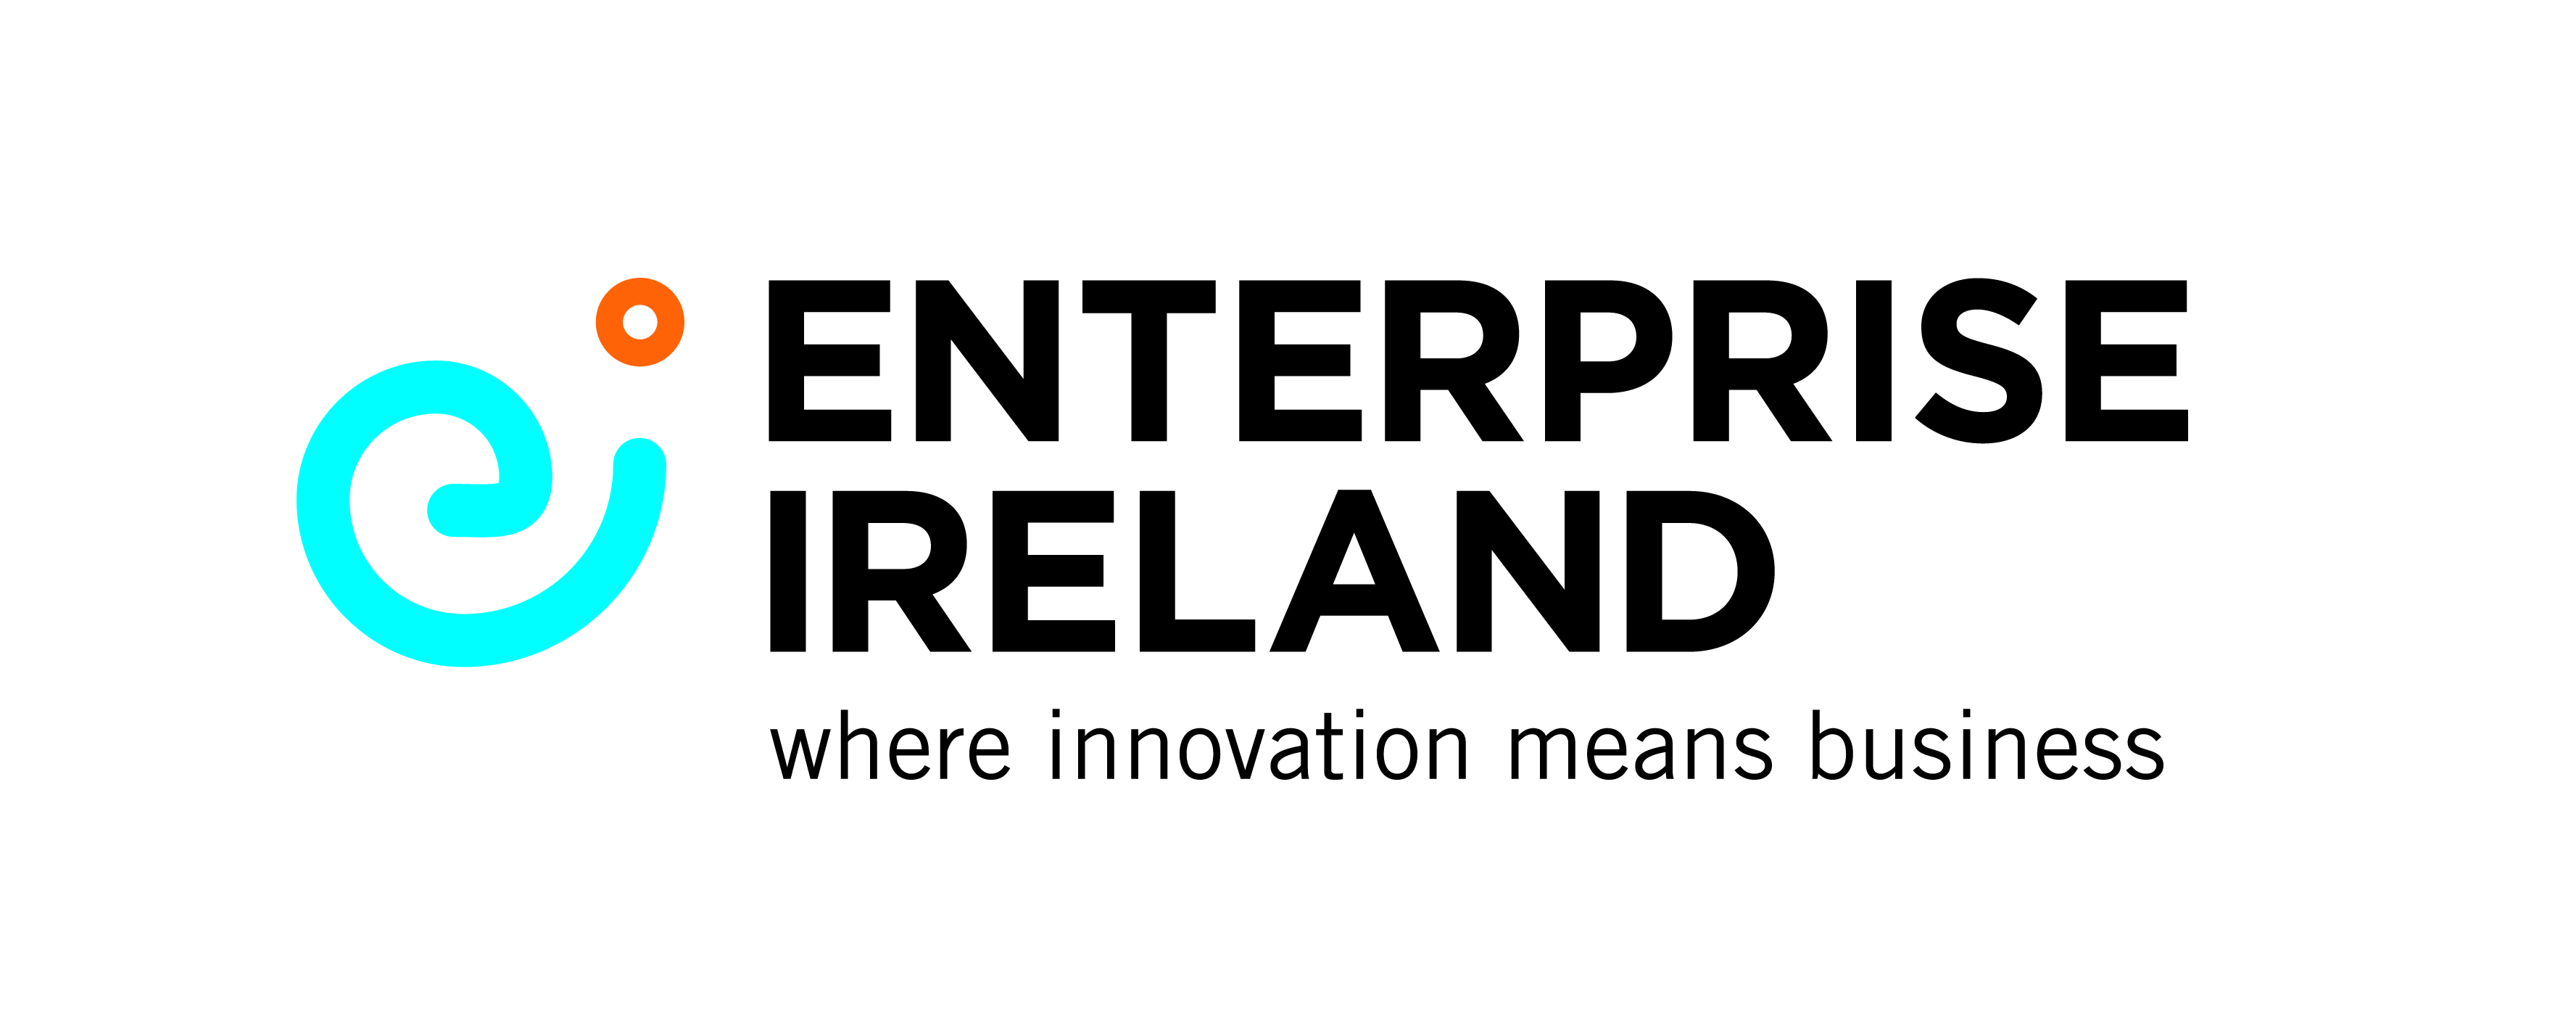 Enterprise ireland Logo